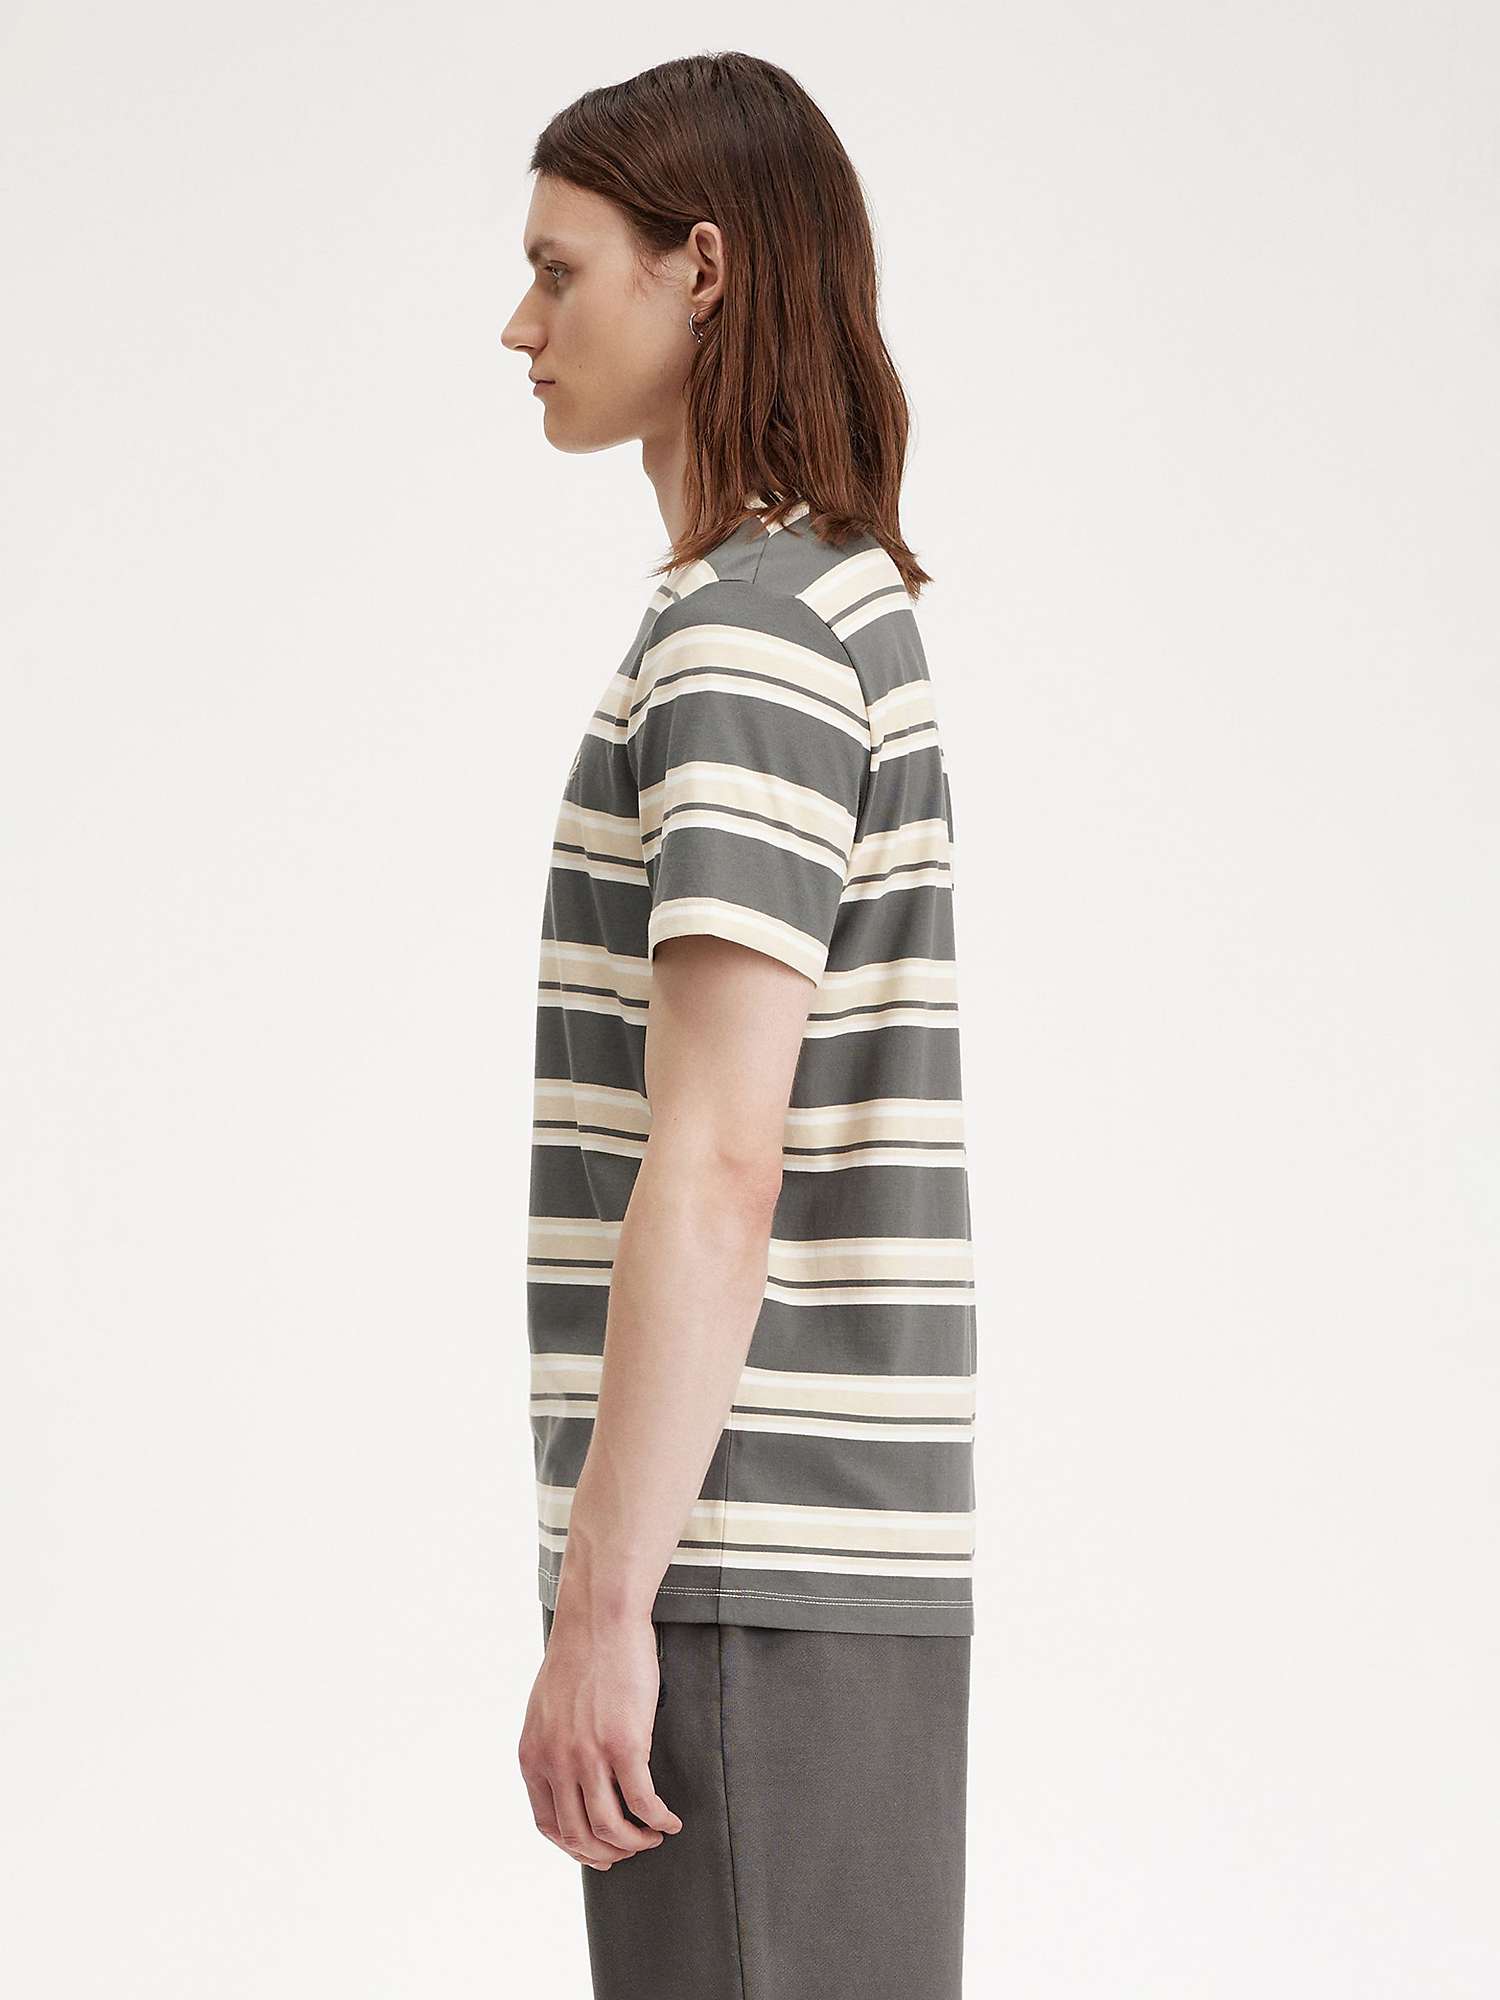 Buy Fred Perry Yarn Dye Stripe T-Shirt, Fieldgreen/Oatmeal Online at johnlewis.com